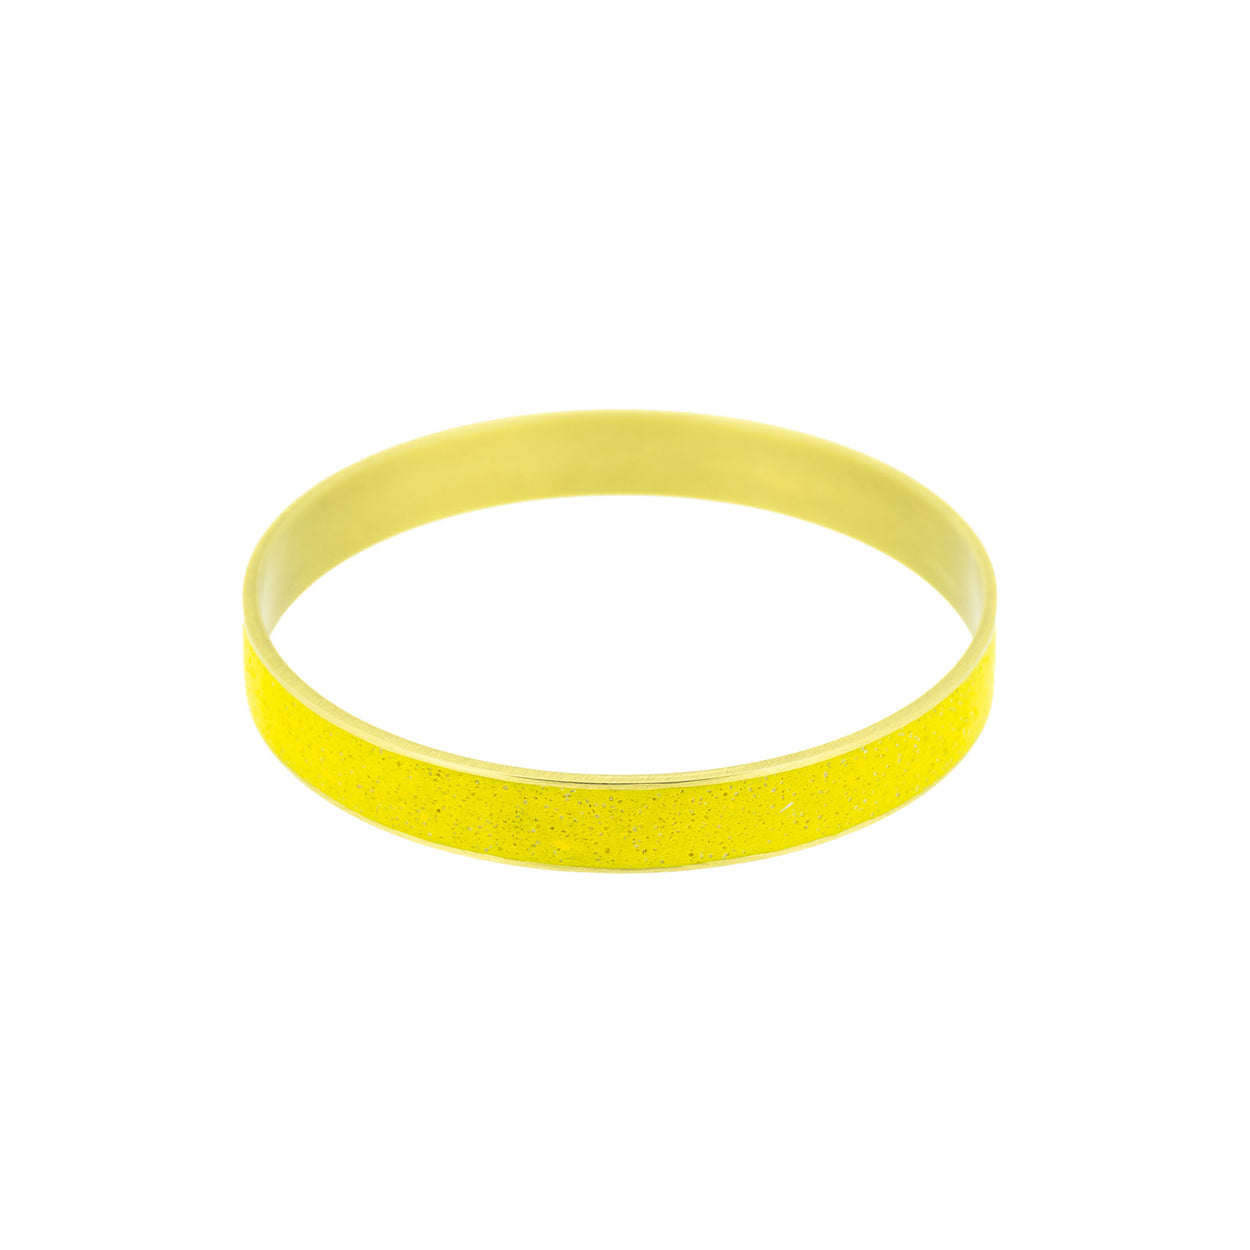 Mustard Yellow Pigmented Concrete Brass Bangle Bracelet Broad Gauge 3/8" or 12mm width